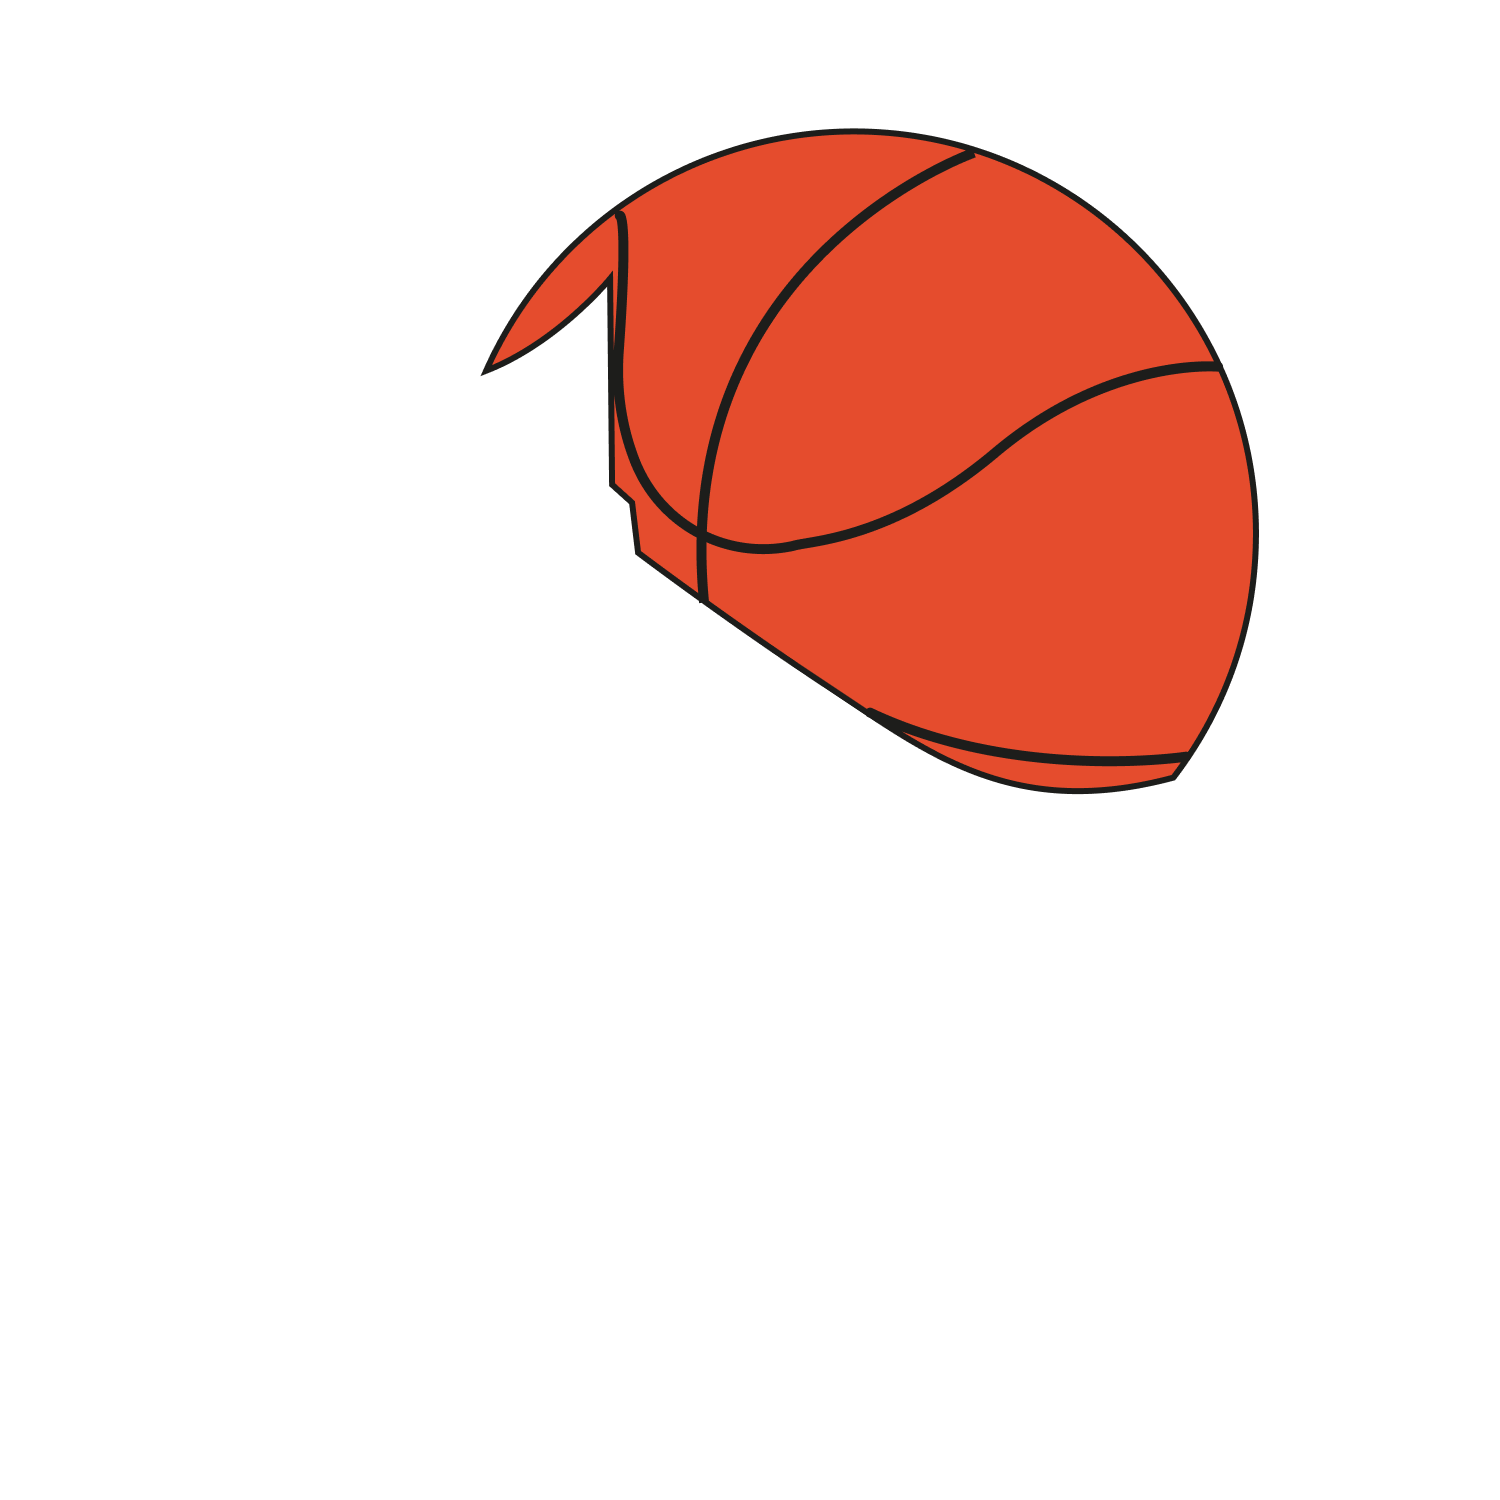 Kick My Sneaker